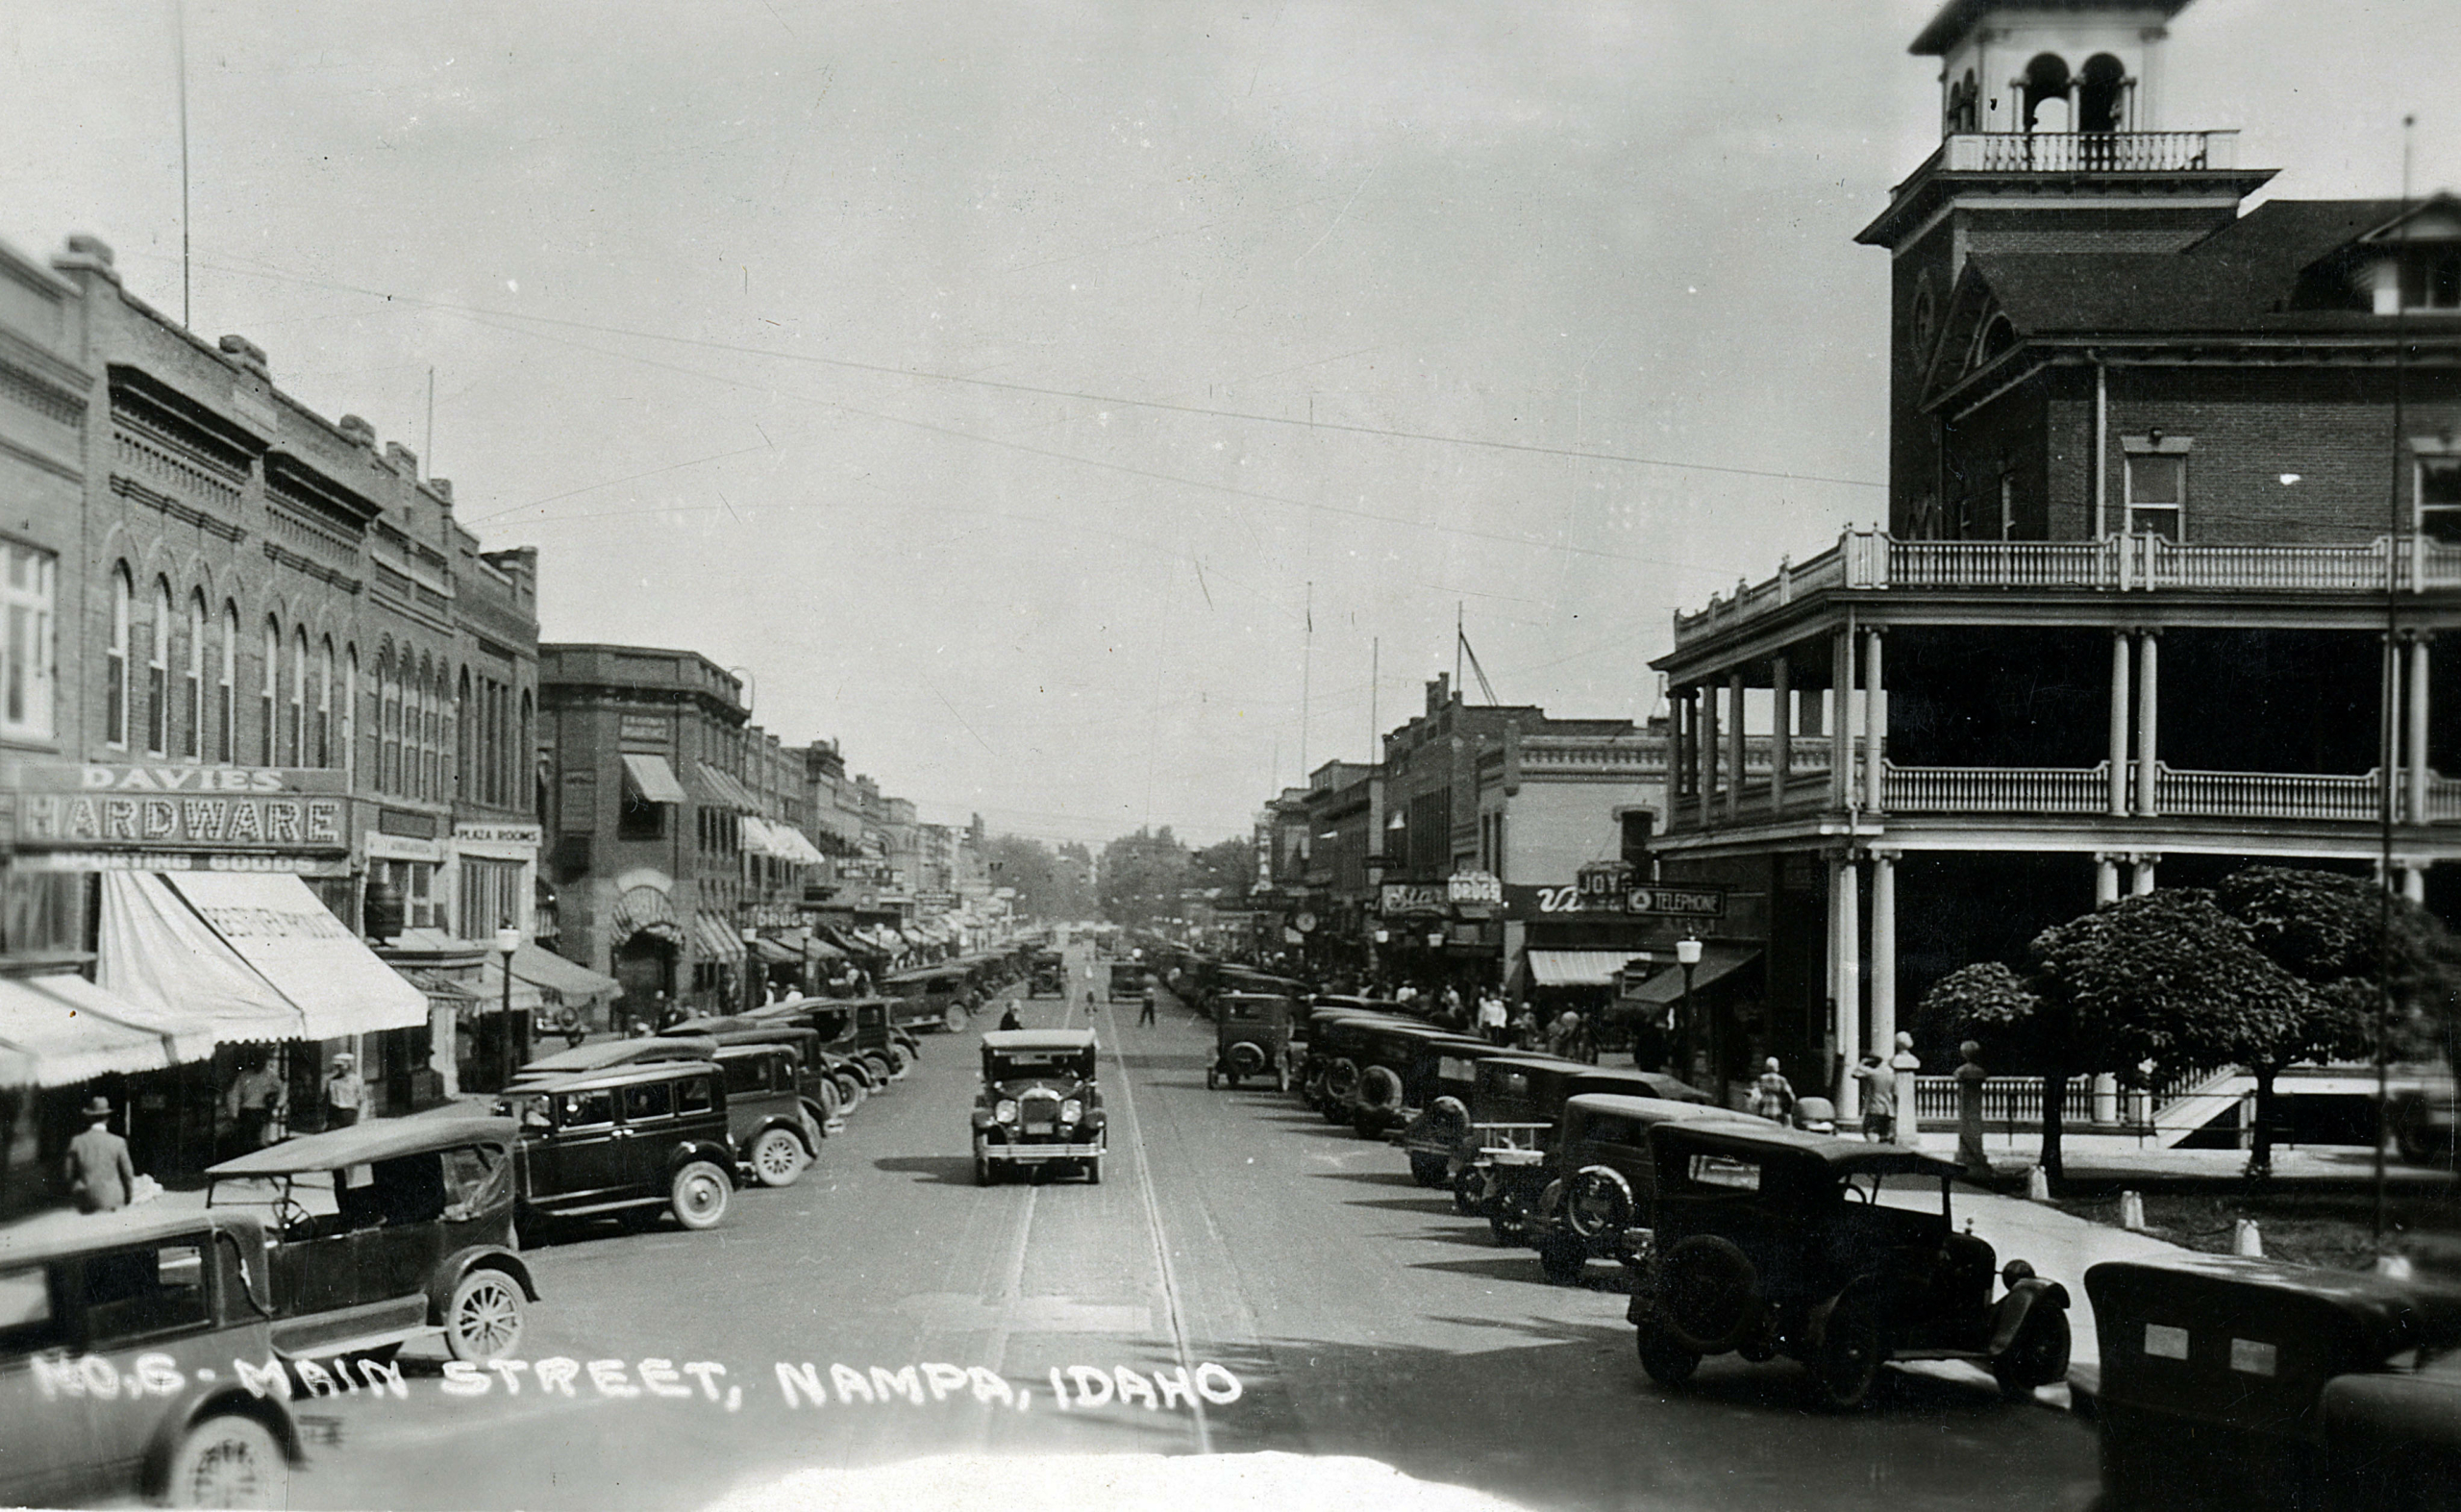 Main Street in Nampa, Idaho - Historic black and white photo